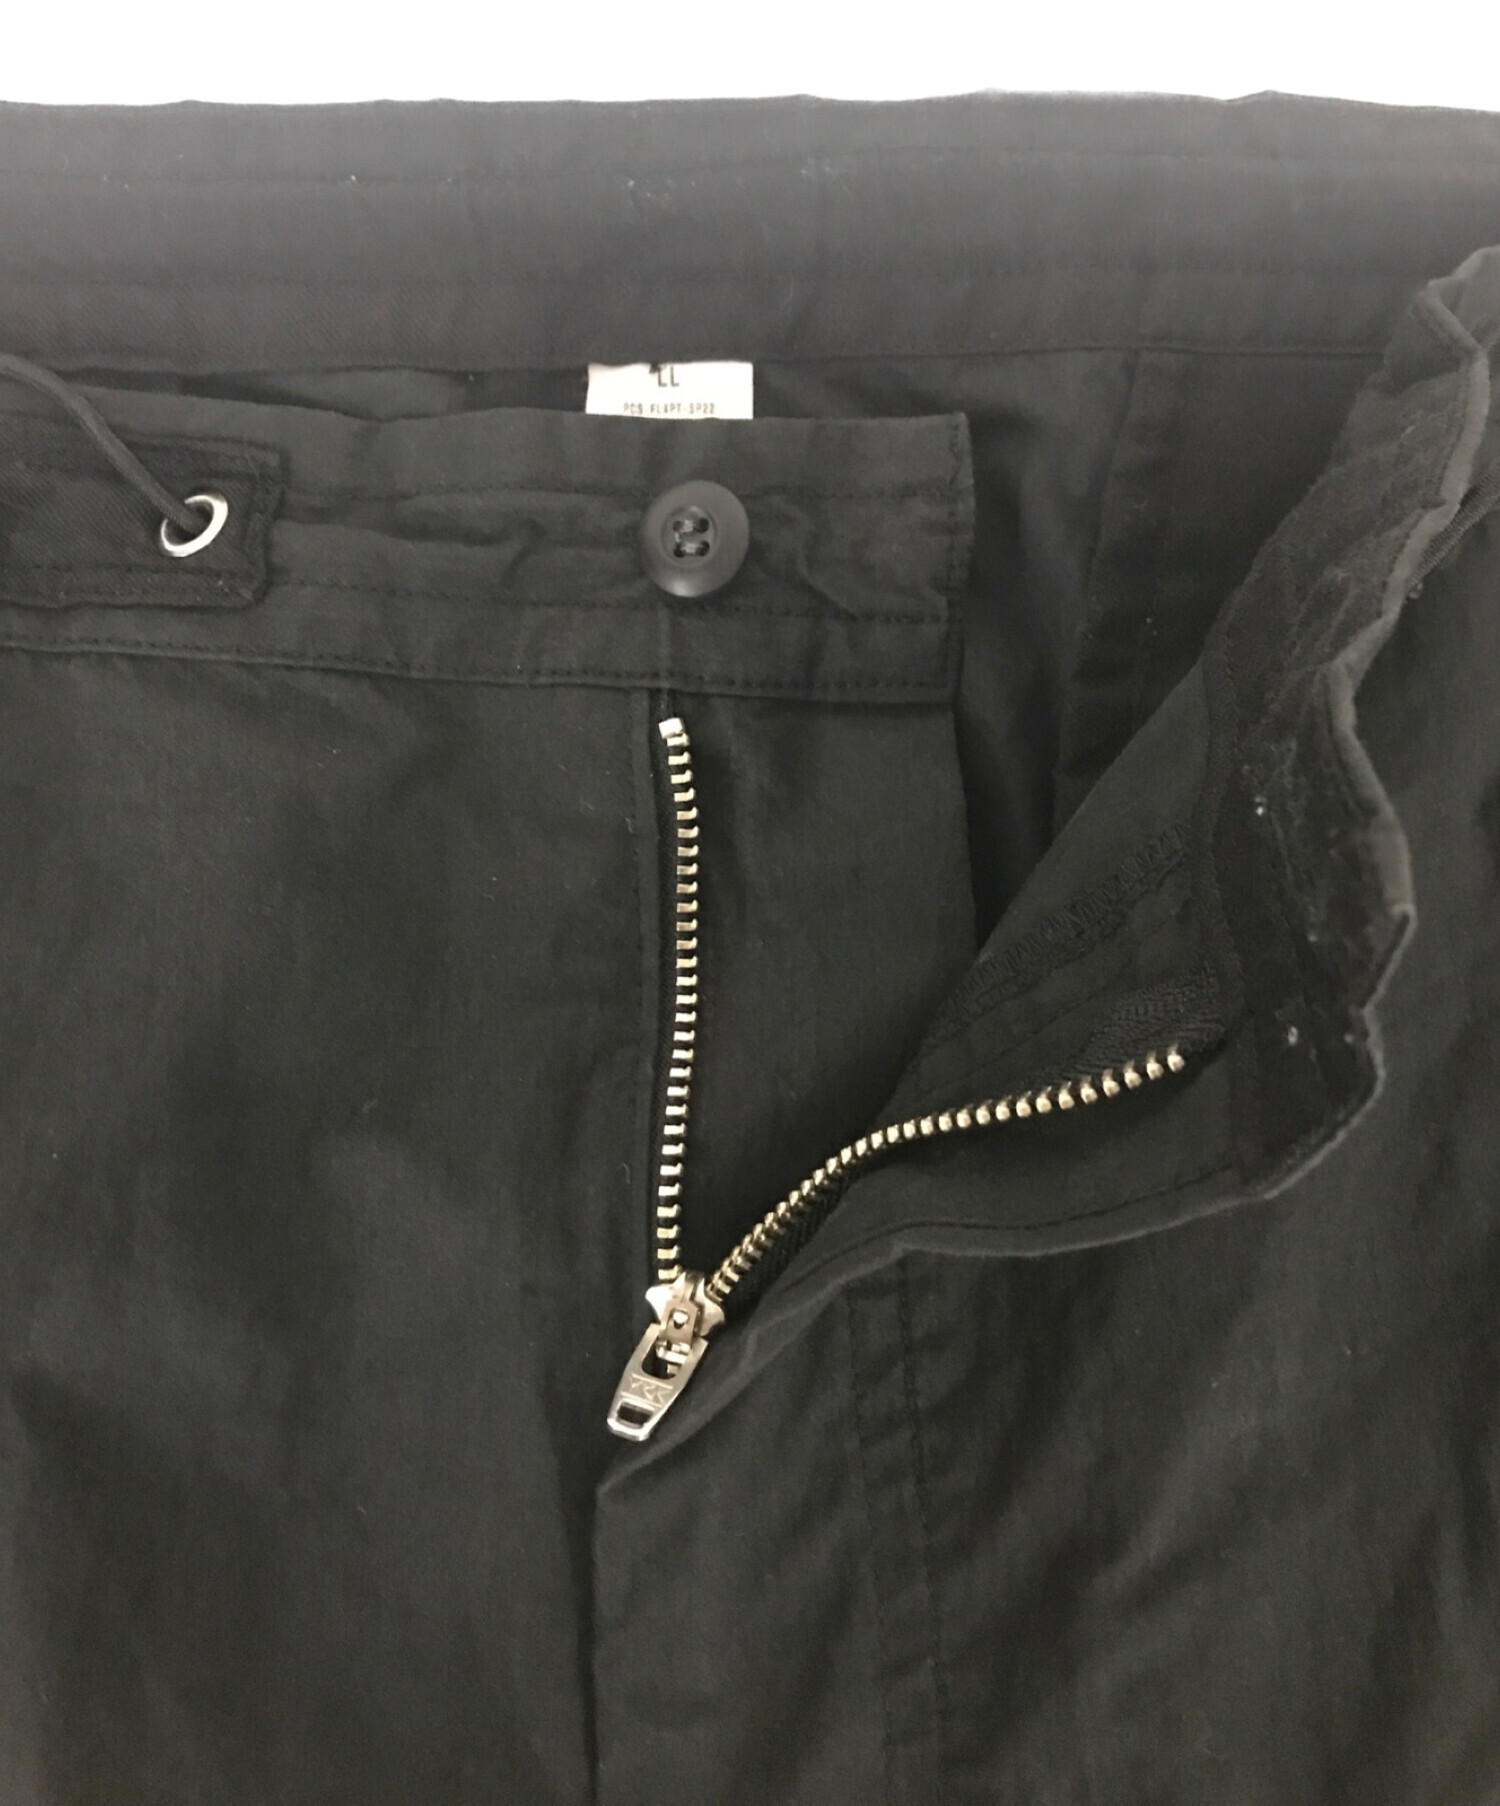 PACS (パックス) Flex Pants ブラック サイズ:LL